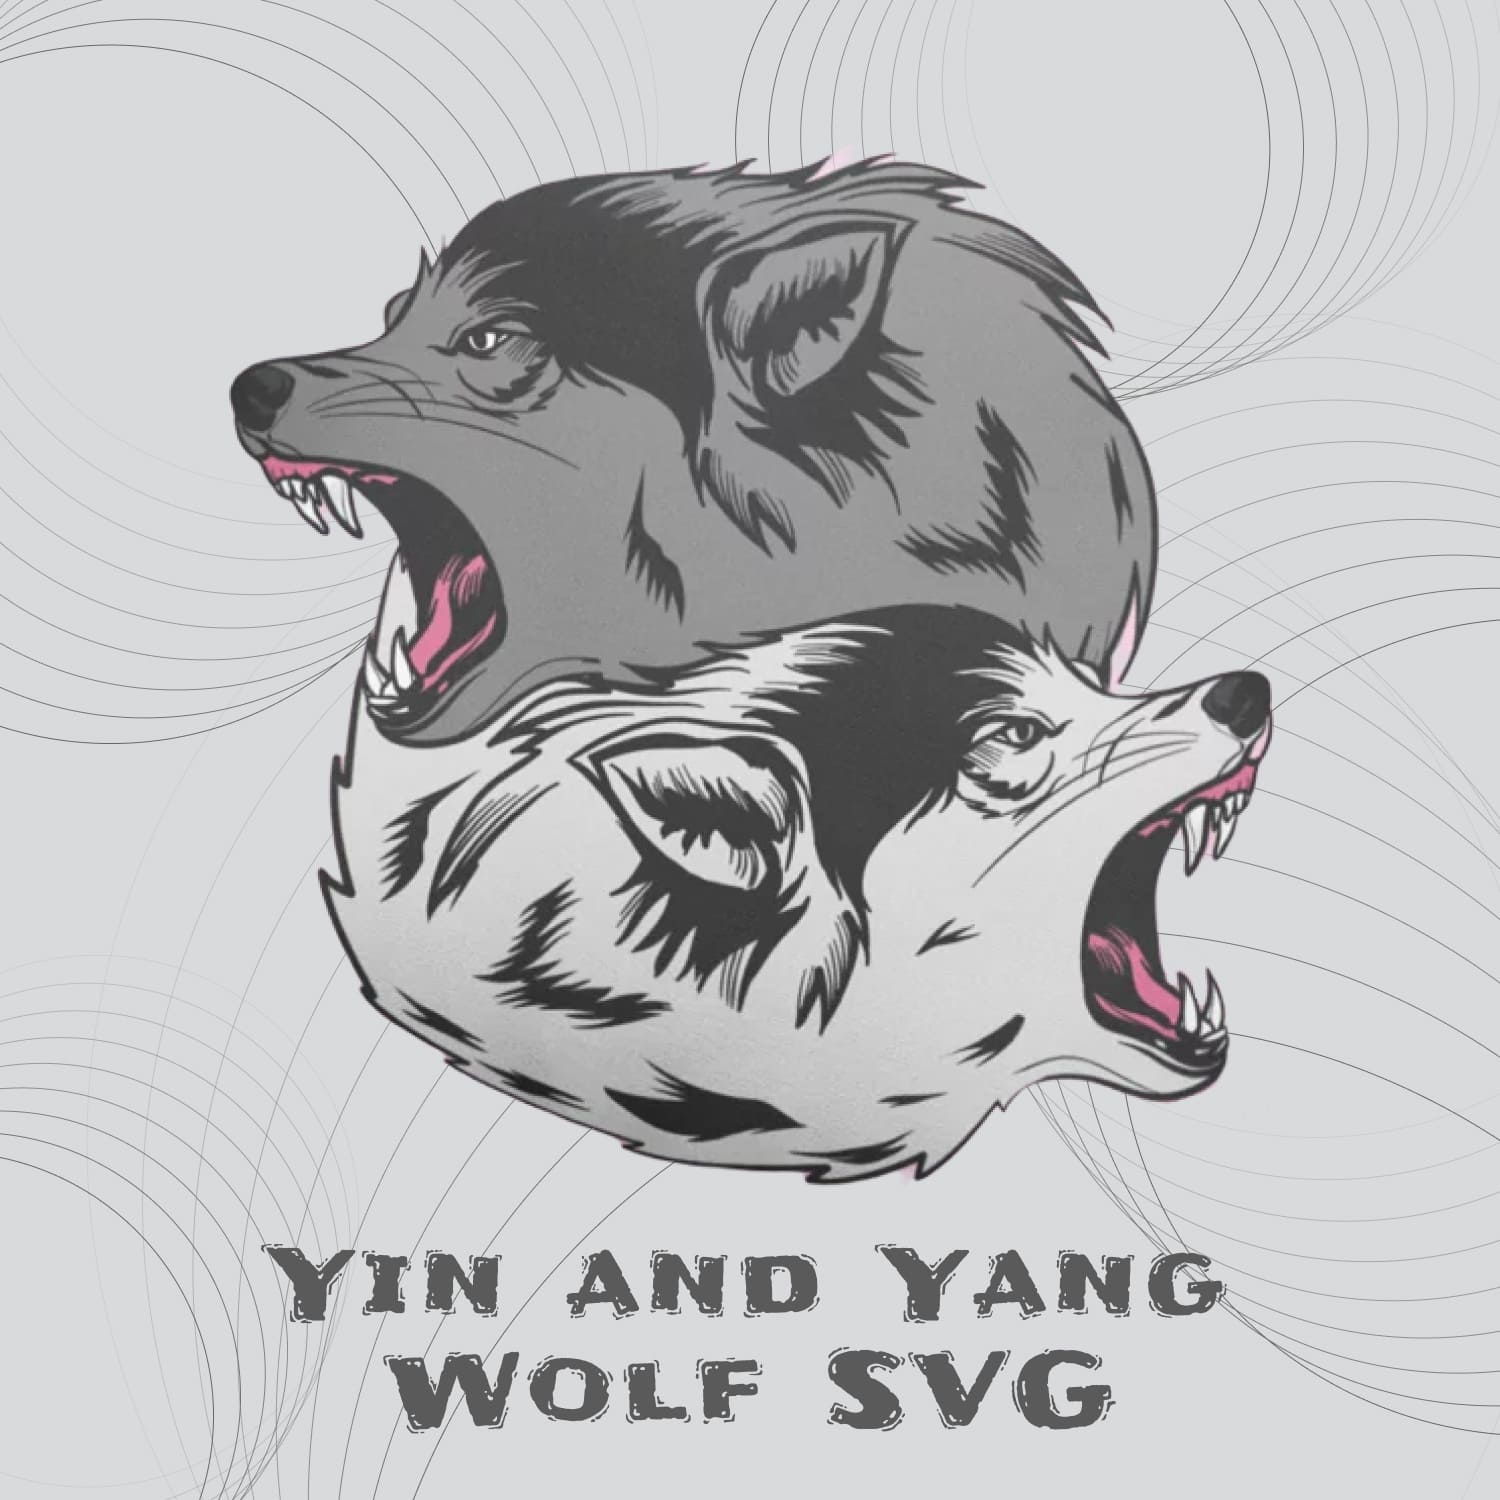 Yin and Yang wolf SVG - main image preview.